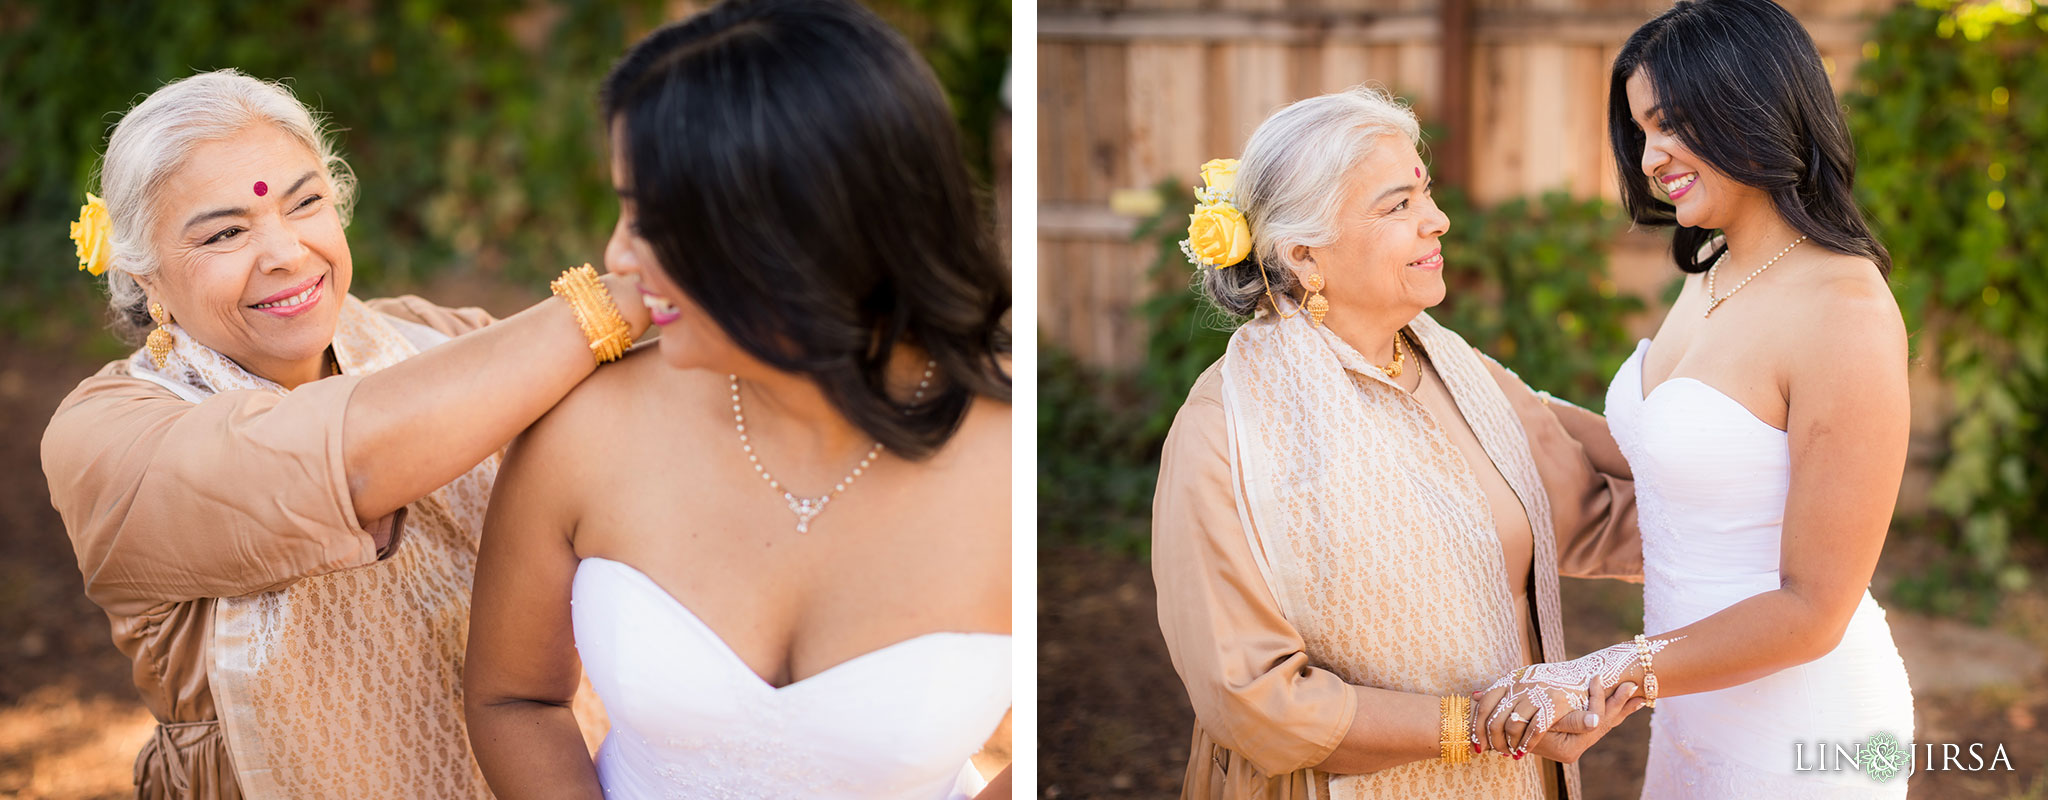 04 Orange County Indian Bride Wedding Photography